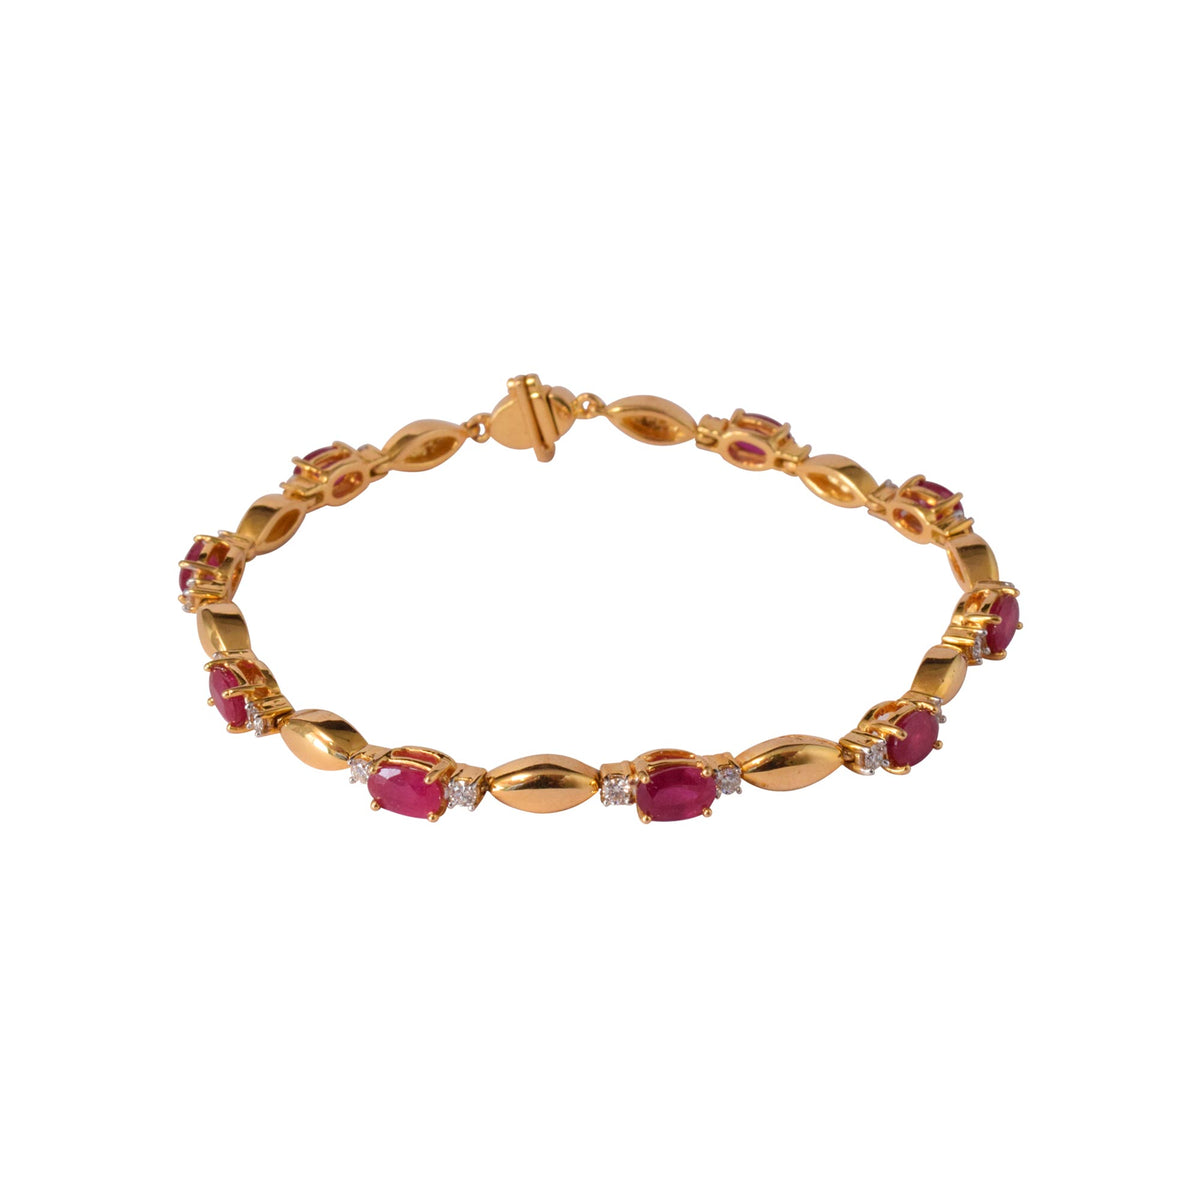 Burmese Ruby and Diamond Bracelet made in 14k Gold - Chris Jewels